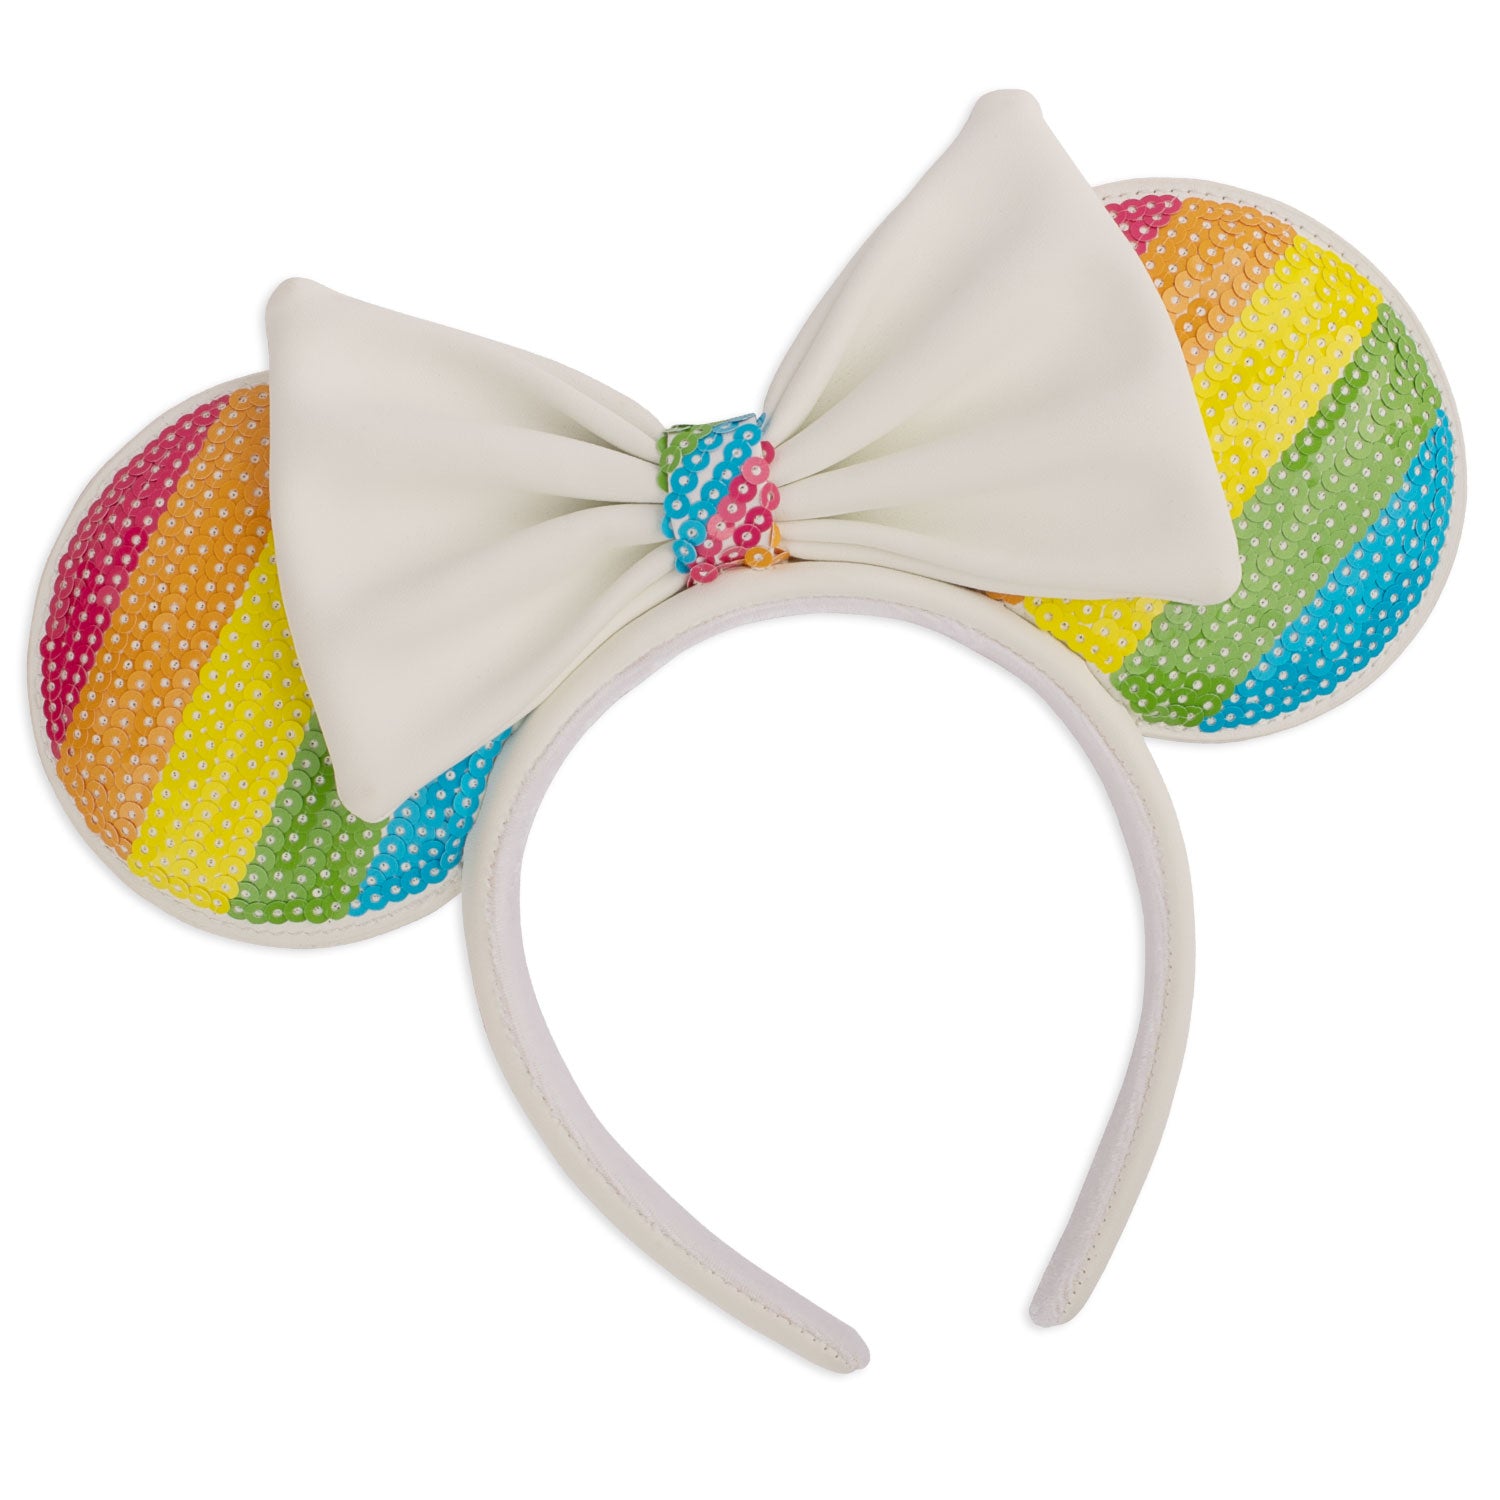 Buy Mickey & Minnie Pastel Snowman Ear Headband at Loungefly.